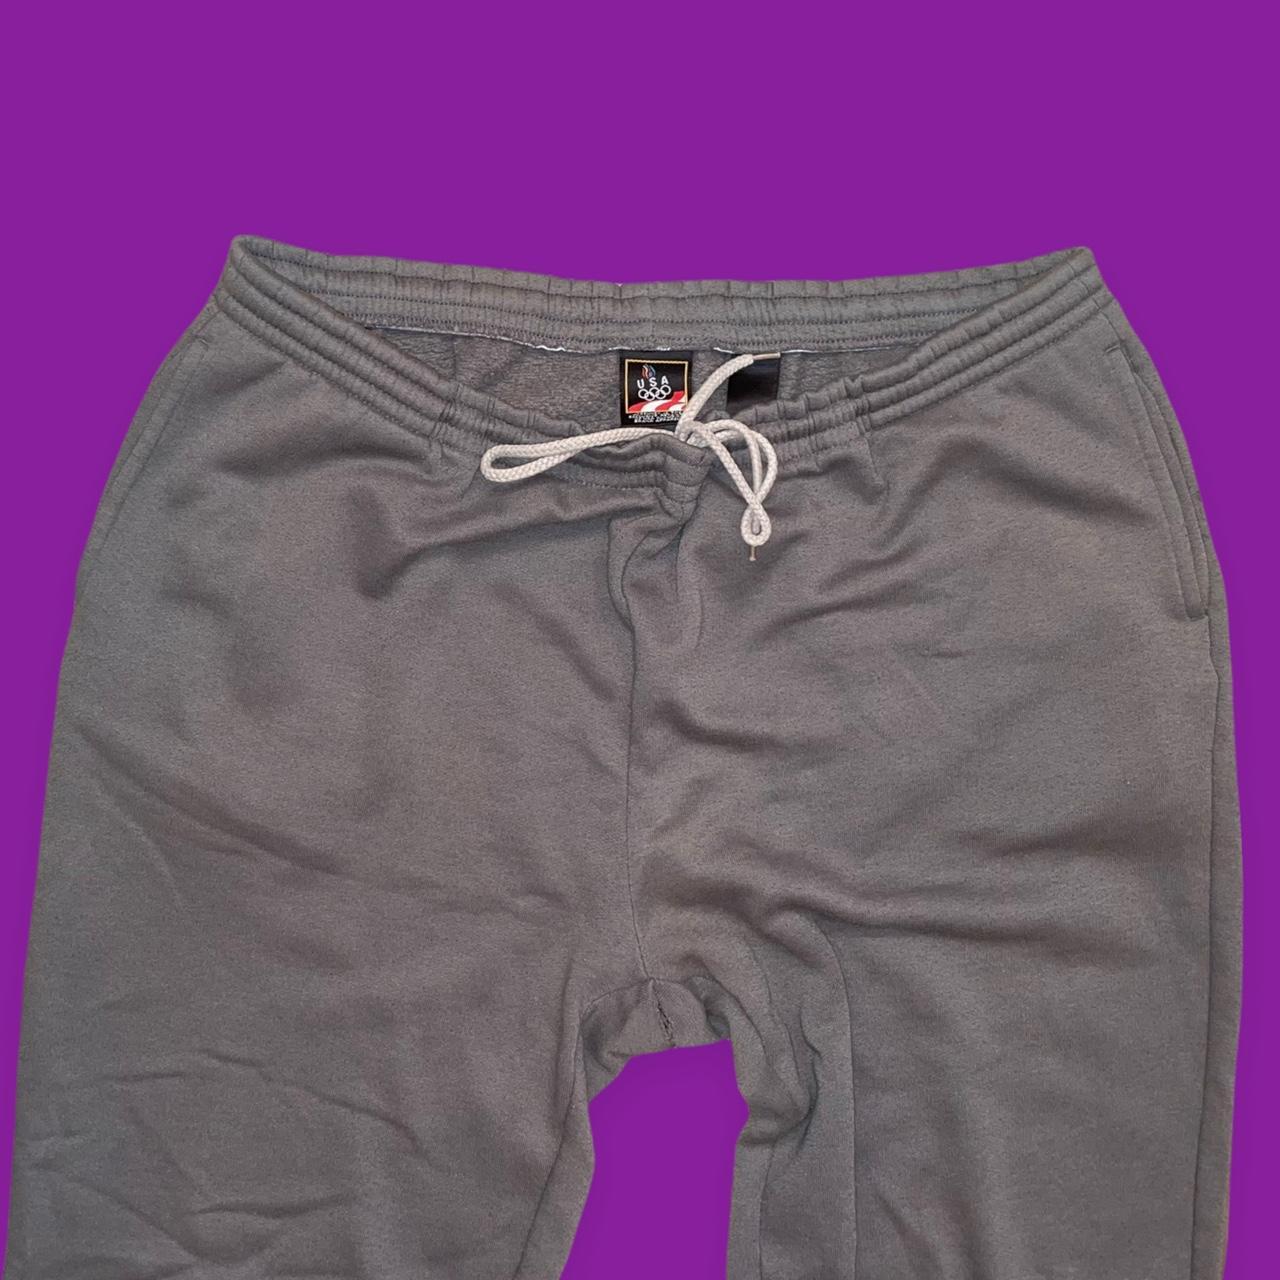 Product Image 1 - Dark grey USA Olympic sweatpants